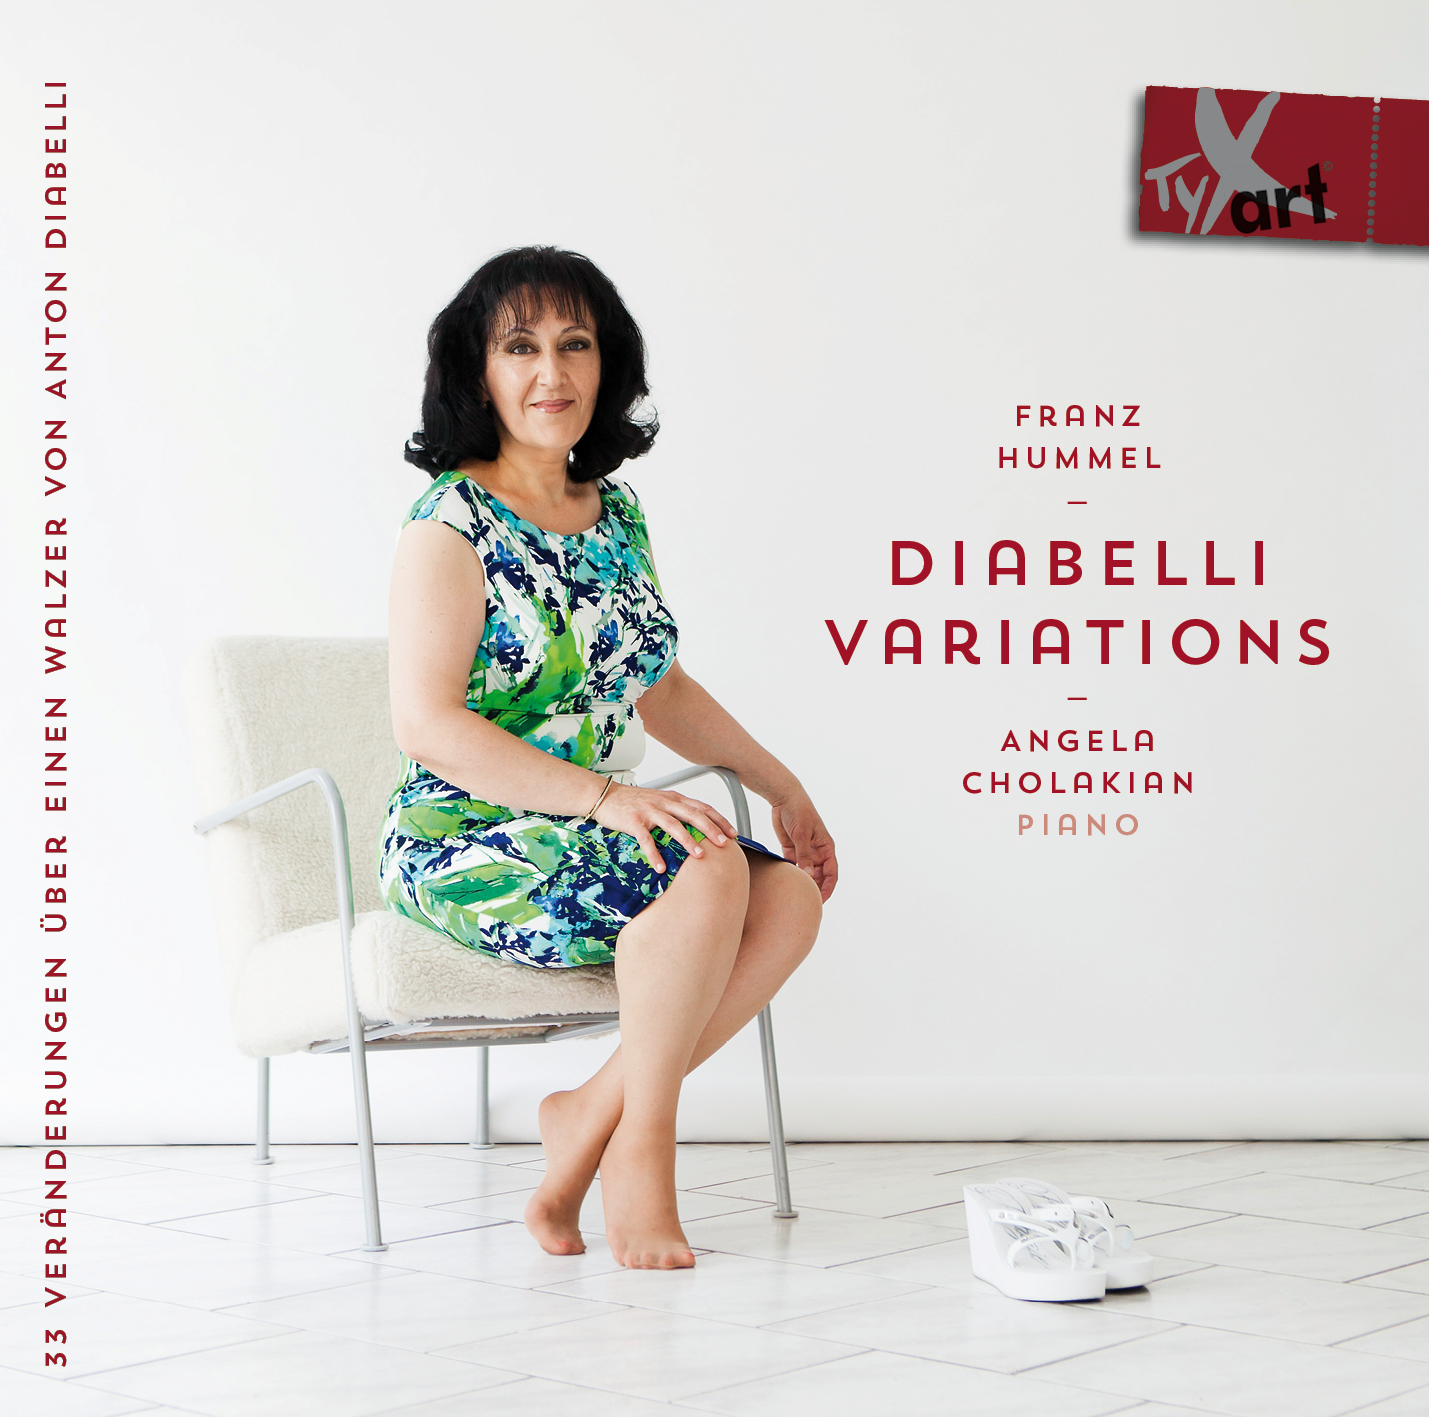 Hummel: Diabelli-Variationen - Angela Cholakian, Klavier